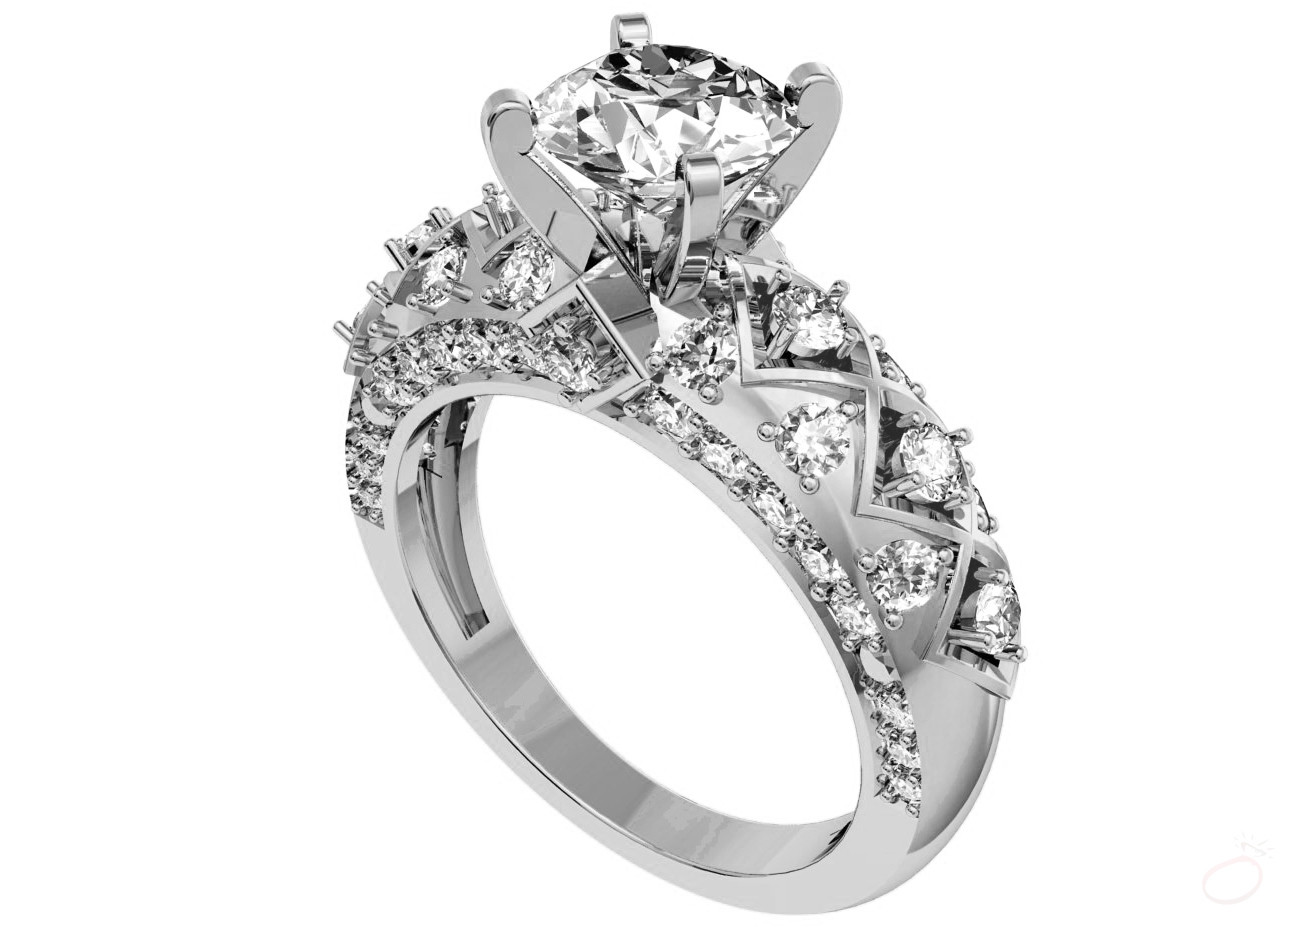 Beautiful Diamond Rings
 How to pick beautiful diamond rings